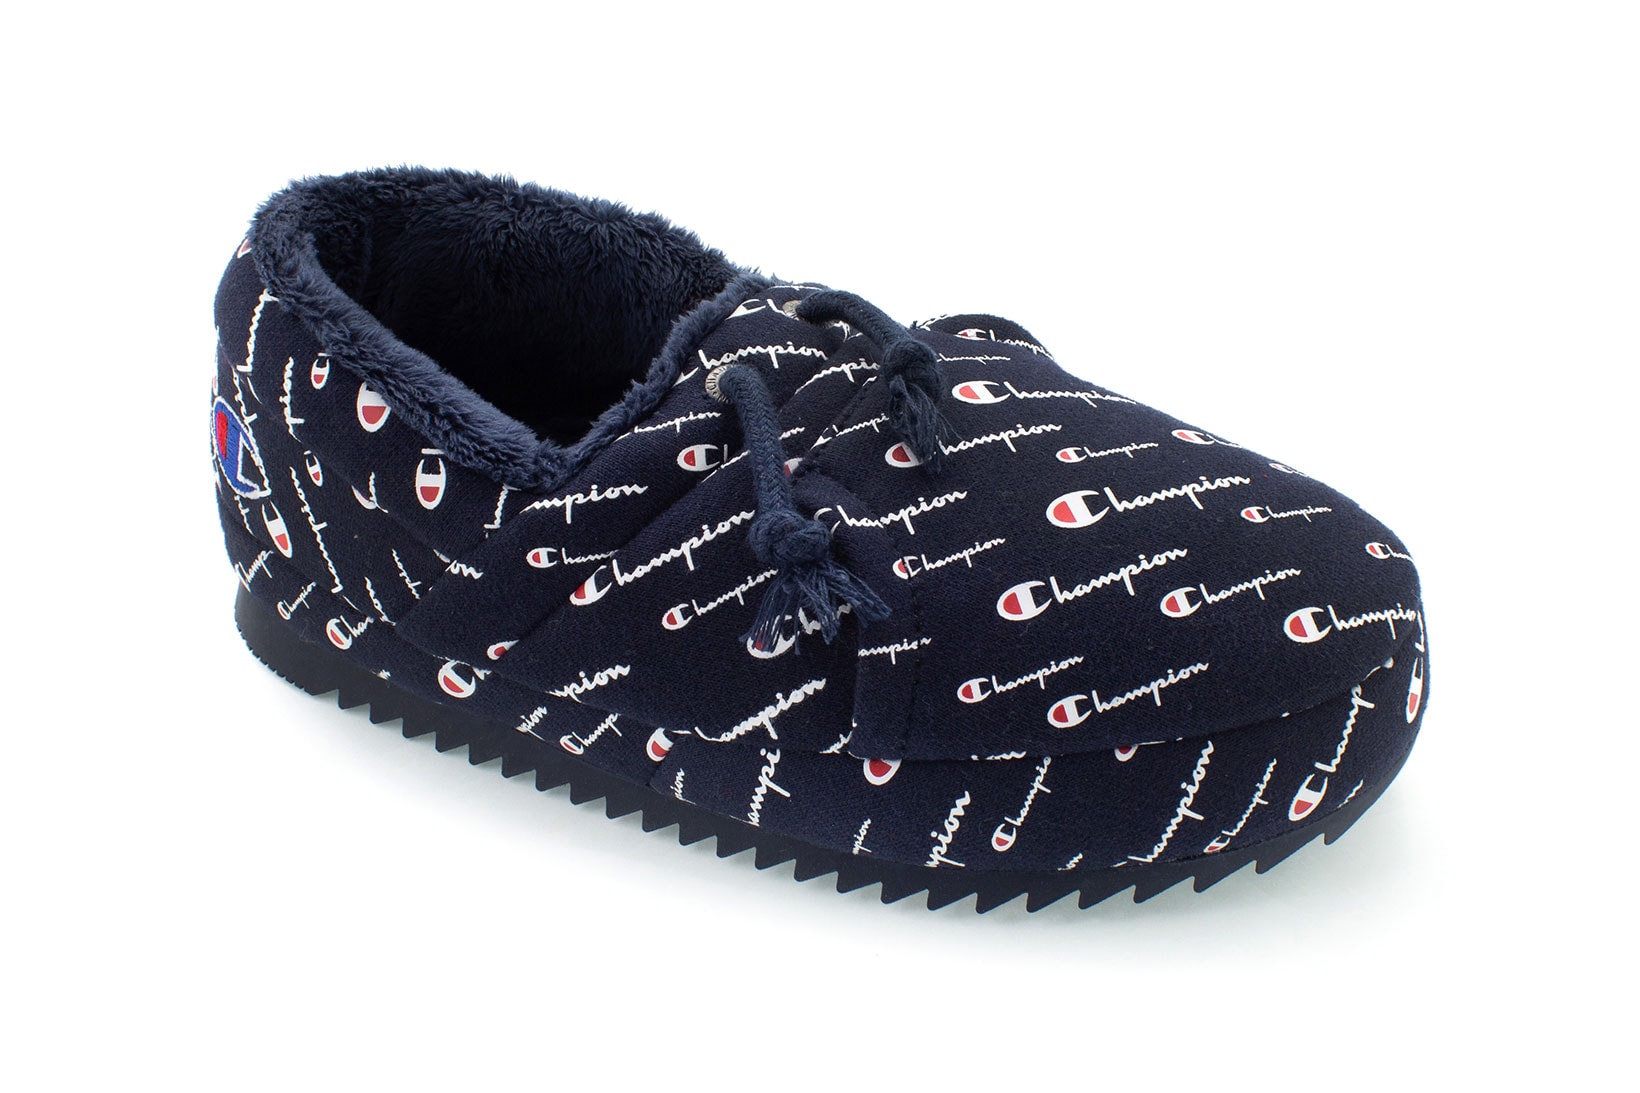 champion university slippers shoes reverse weave hoodies white grey red blue black loungewear